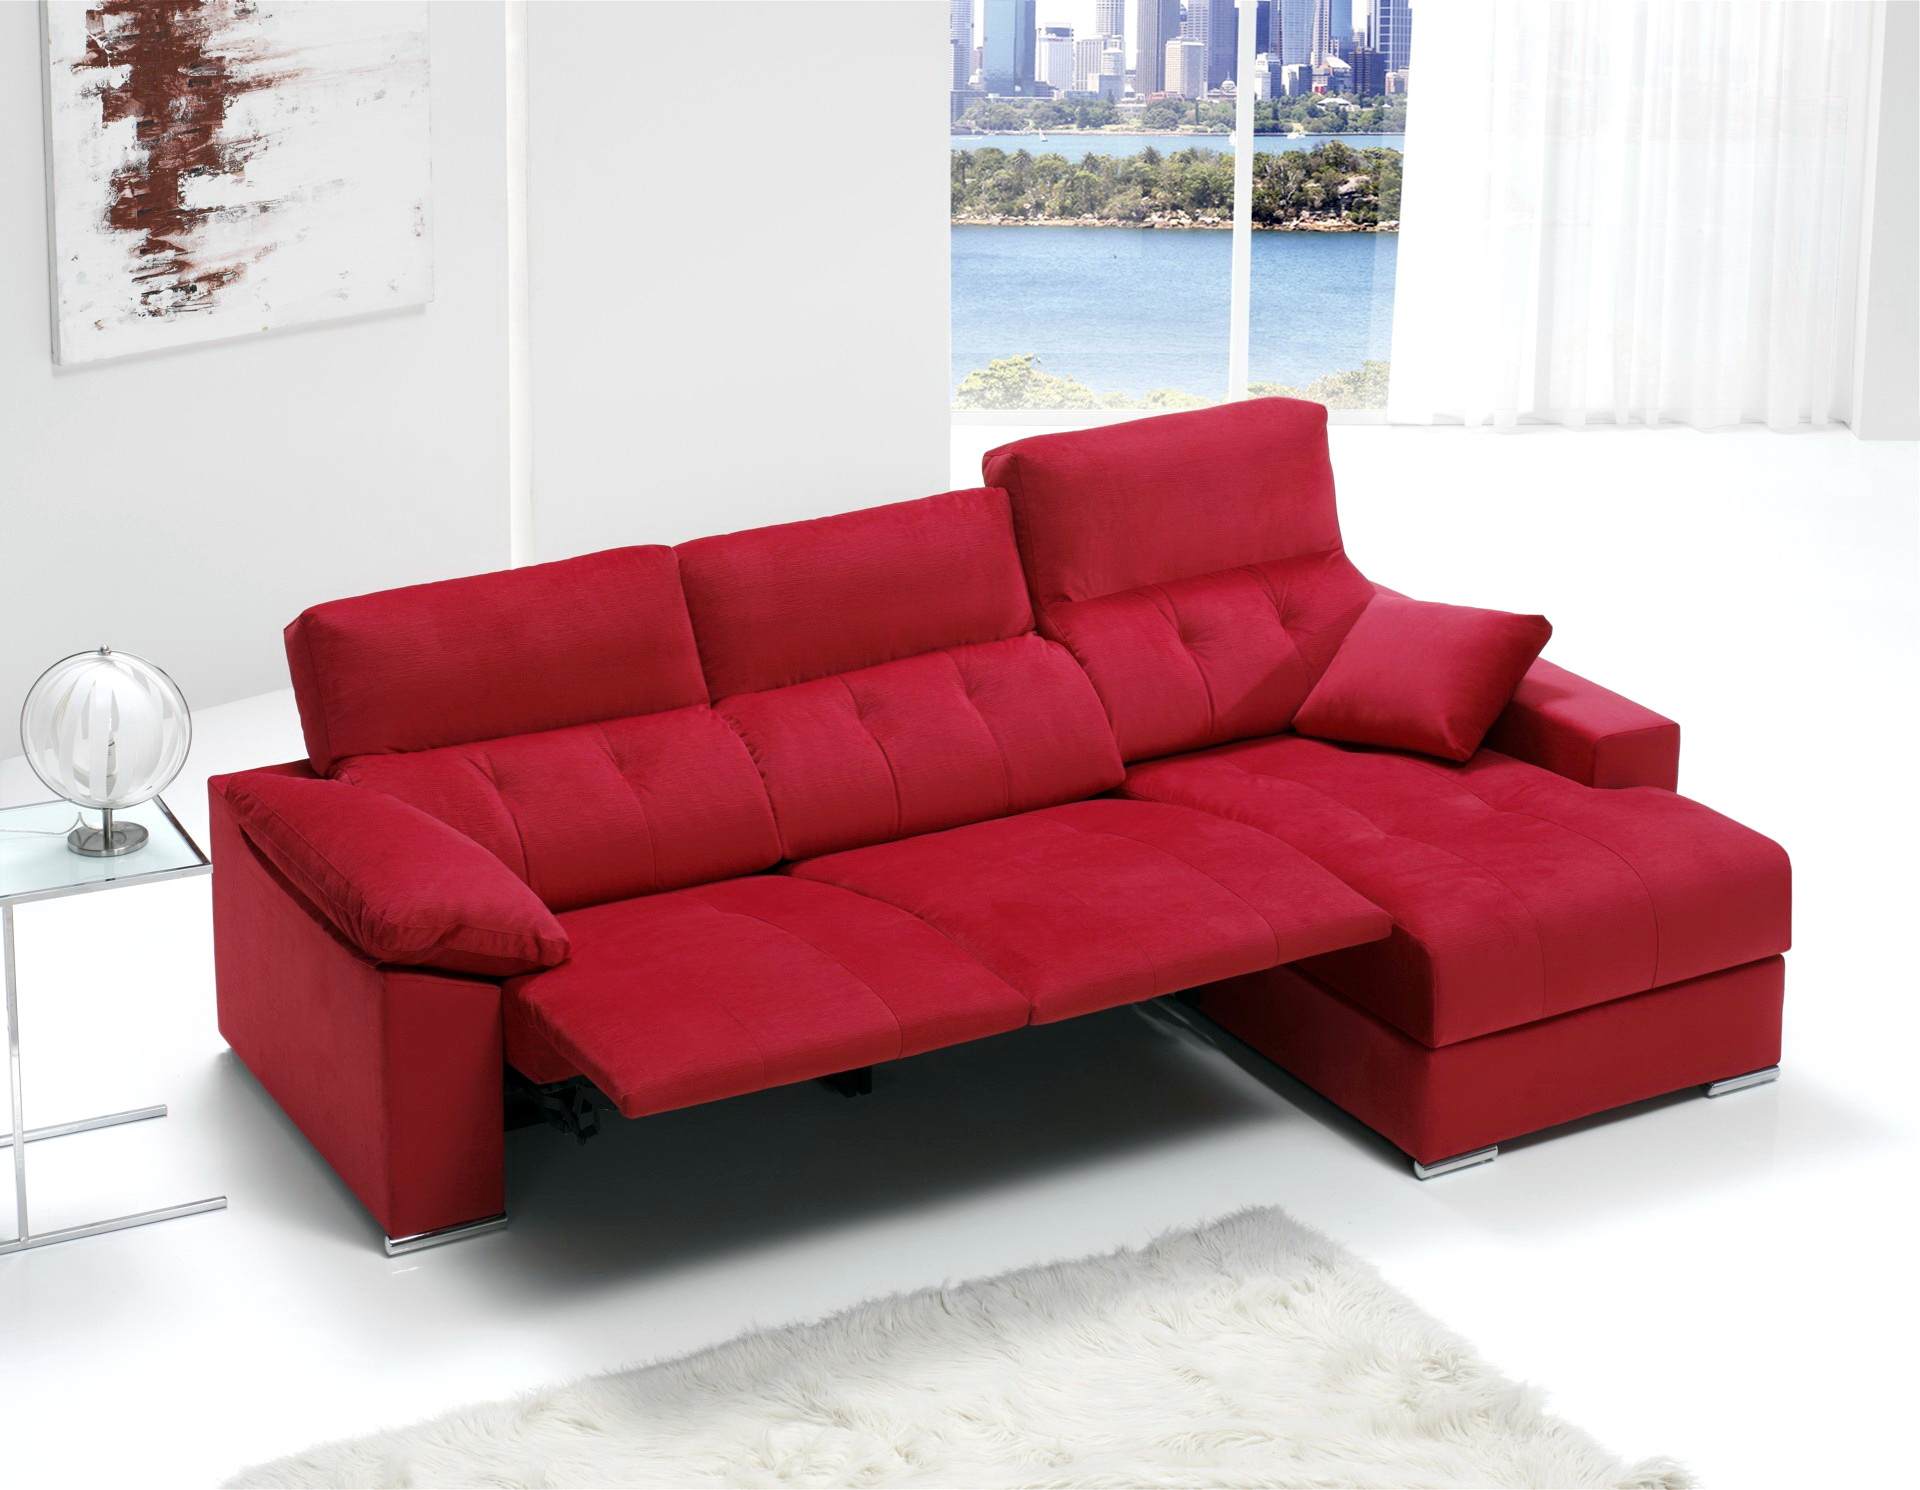 Soriano Martinez Tapizados chaise-longue modelo 594 confort 0063 en muebles antoñán® León